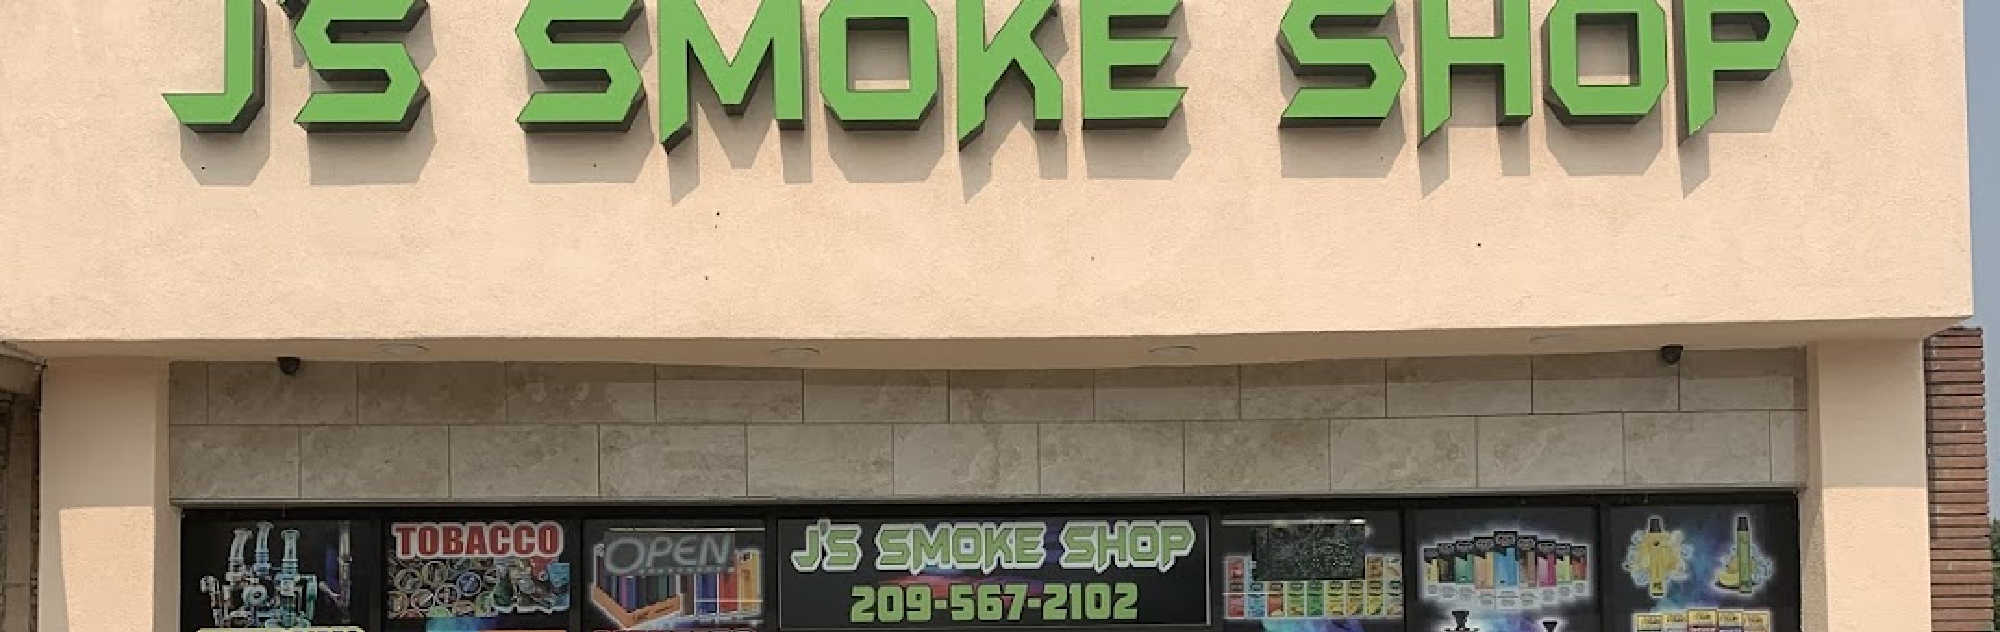 image of js smoke shop in turlock california